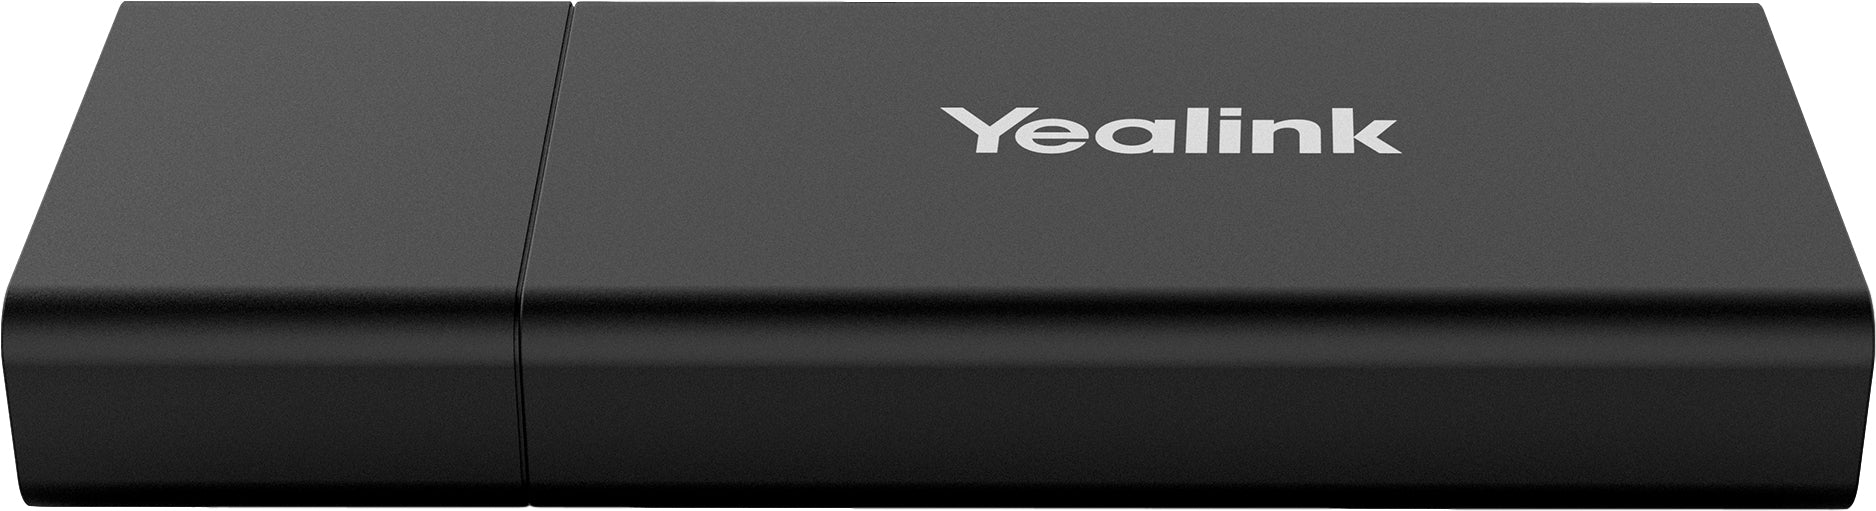 Yealink VCH51 Sharing Box Black-2